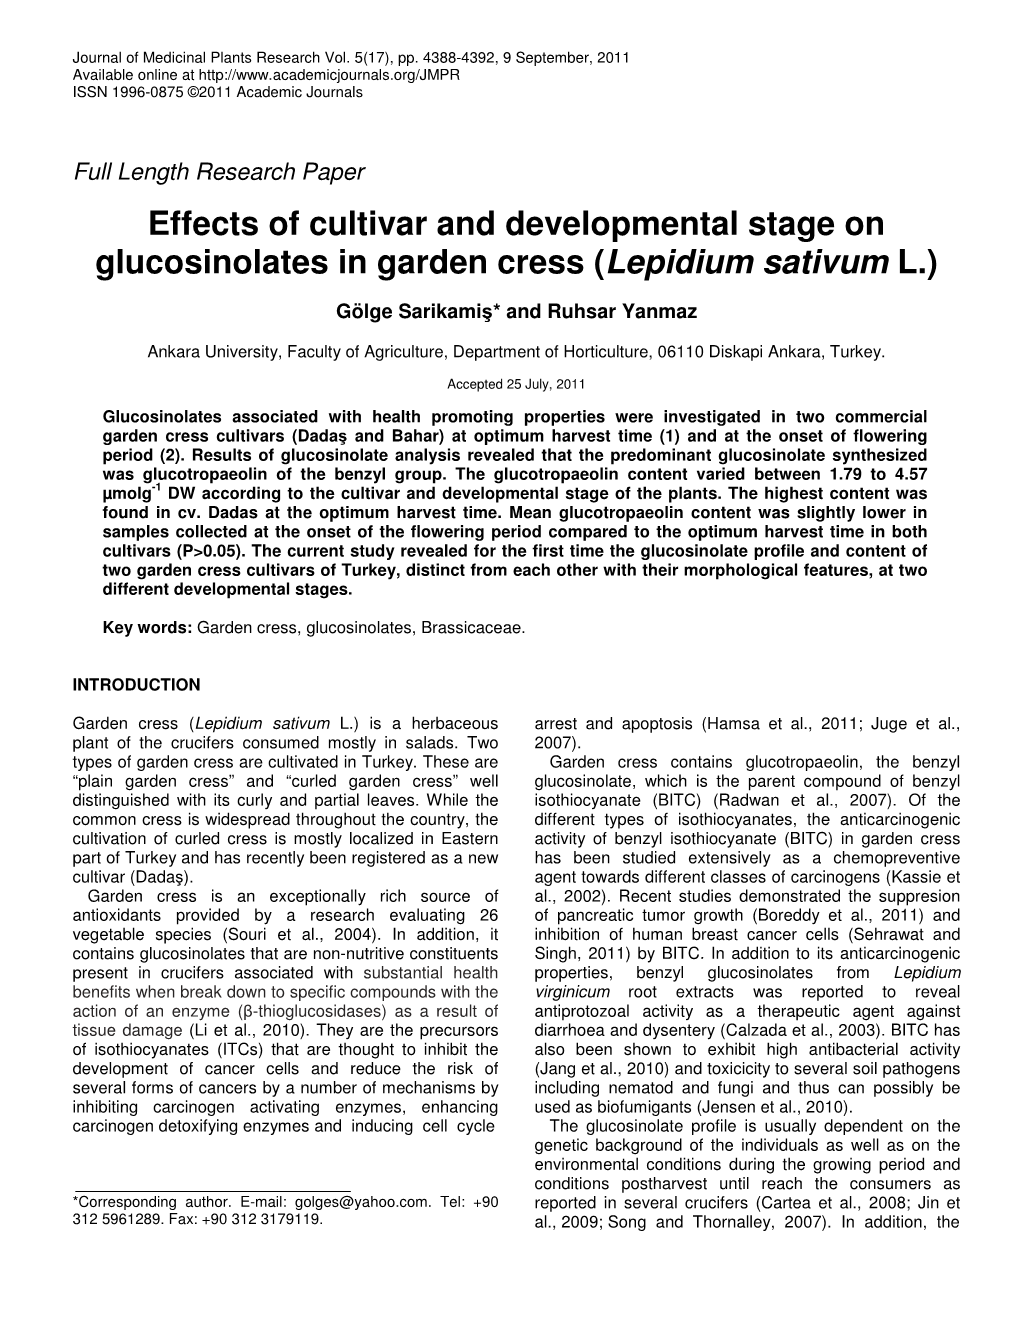 Effects of Cultivar and Developmental Stage on Glucosinolates in Garden Cress (Lepidium Sativum L.)